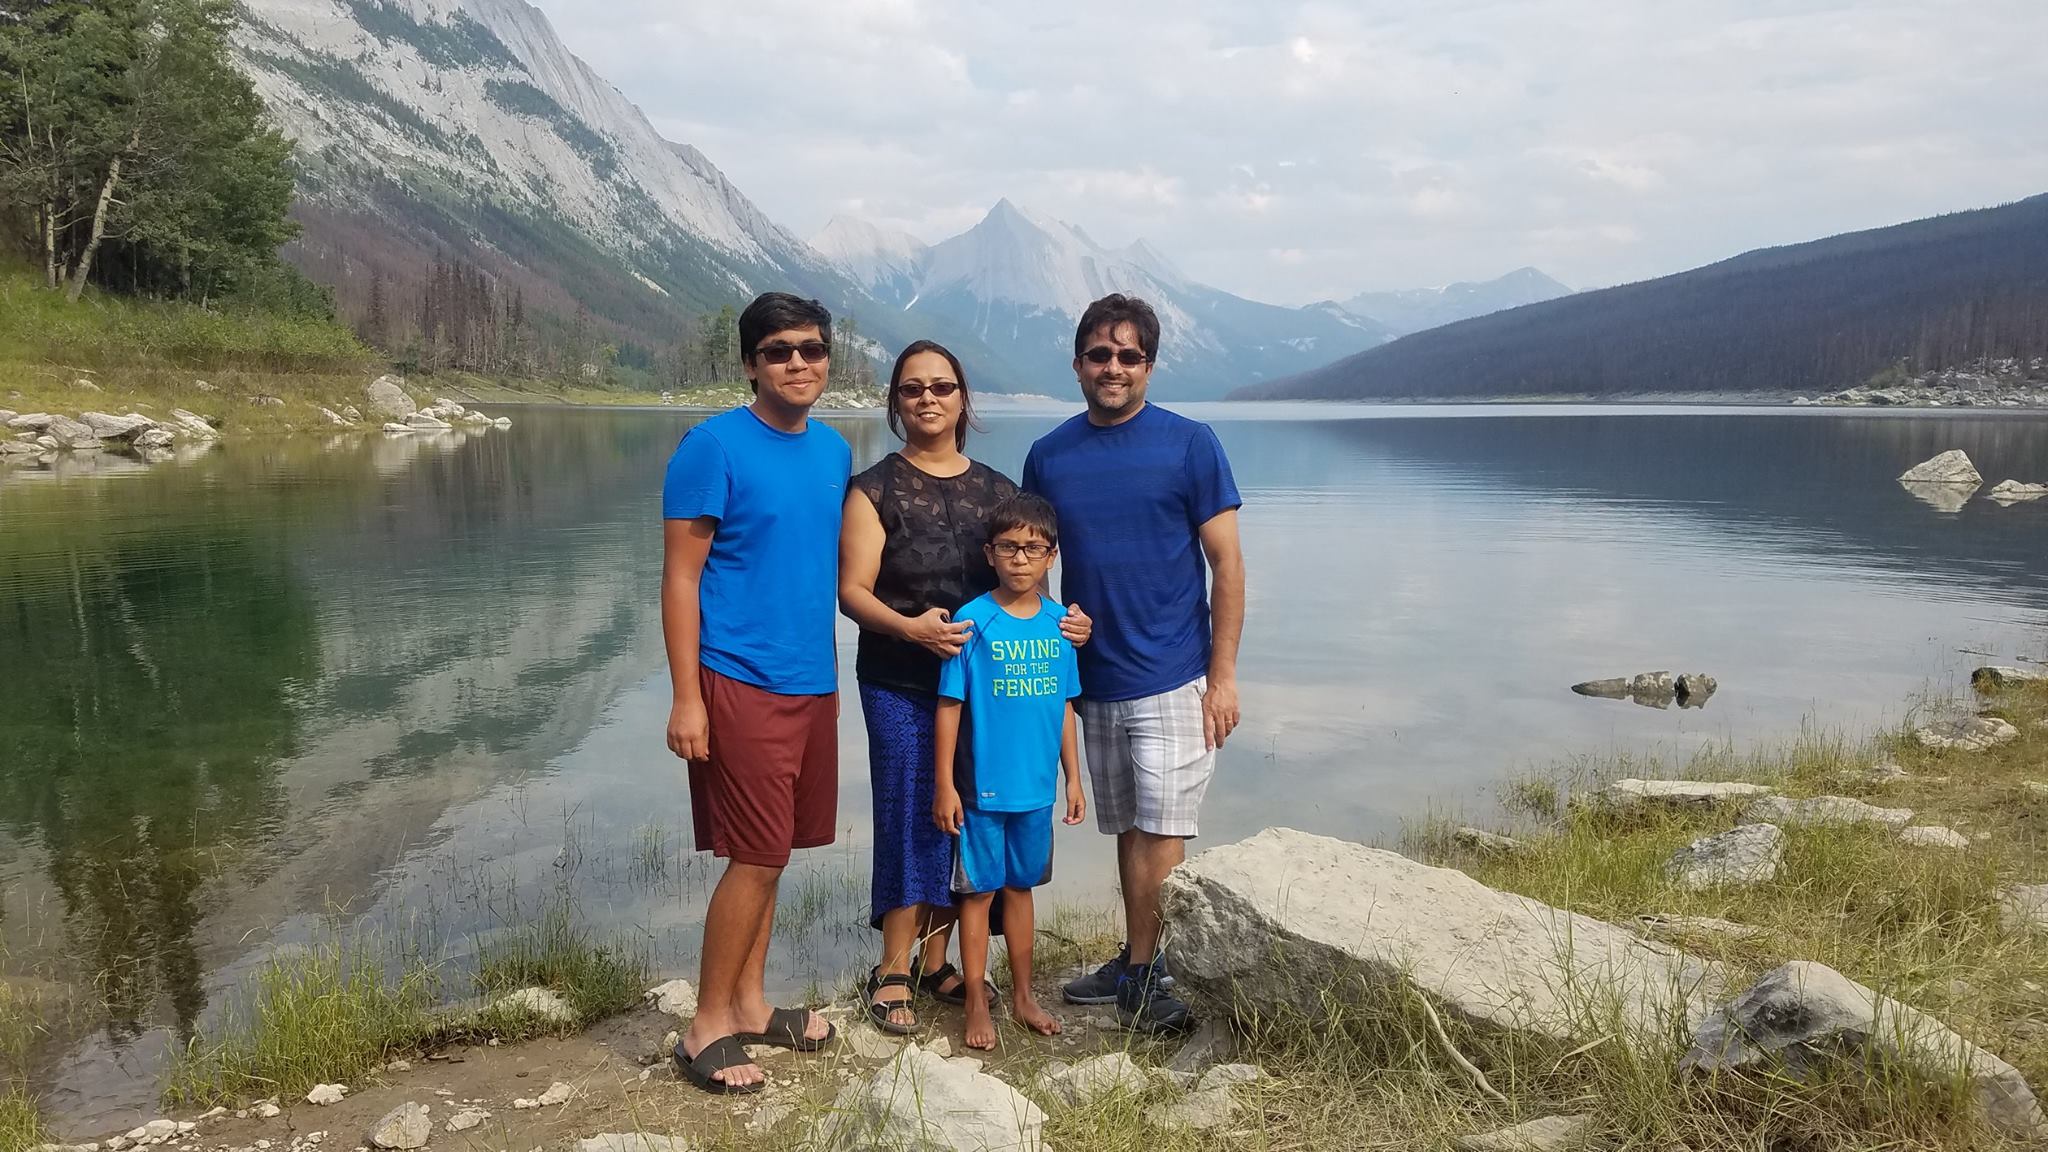 My Family at Medicine Lake, Alberta, Canada